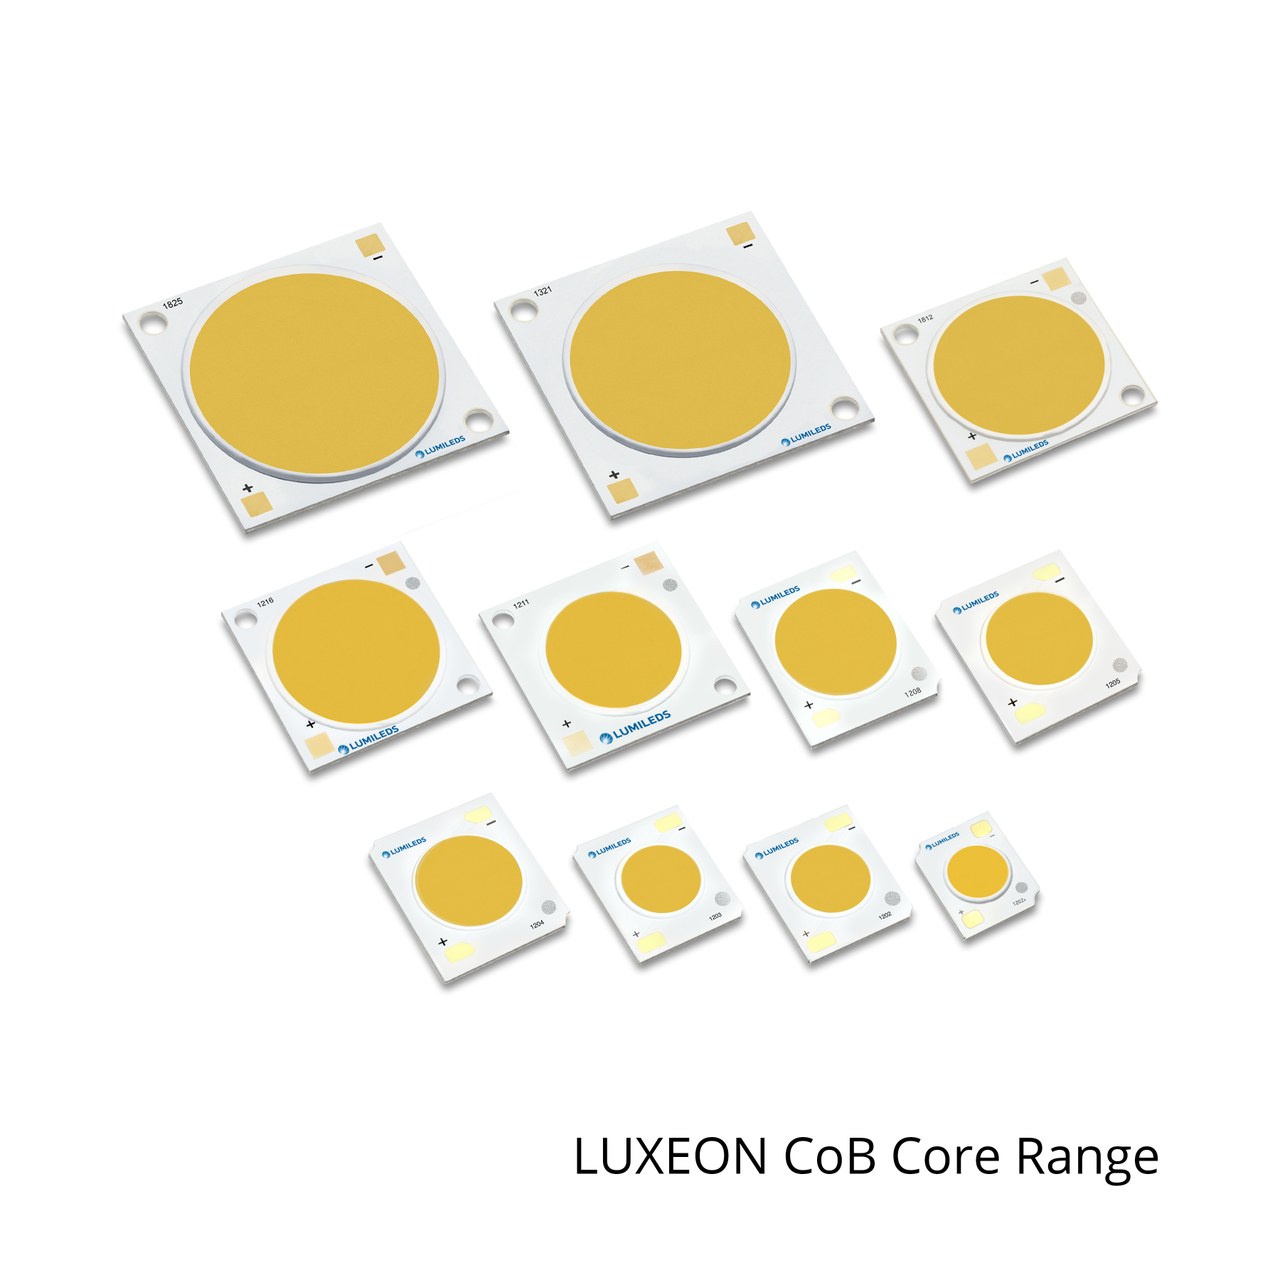 LUXEON CoB Core Range_Gen3_Group_ColorLogo_label.jpg